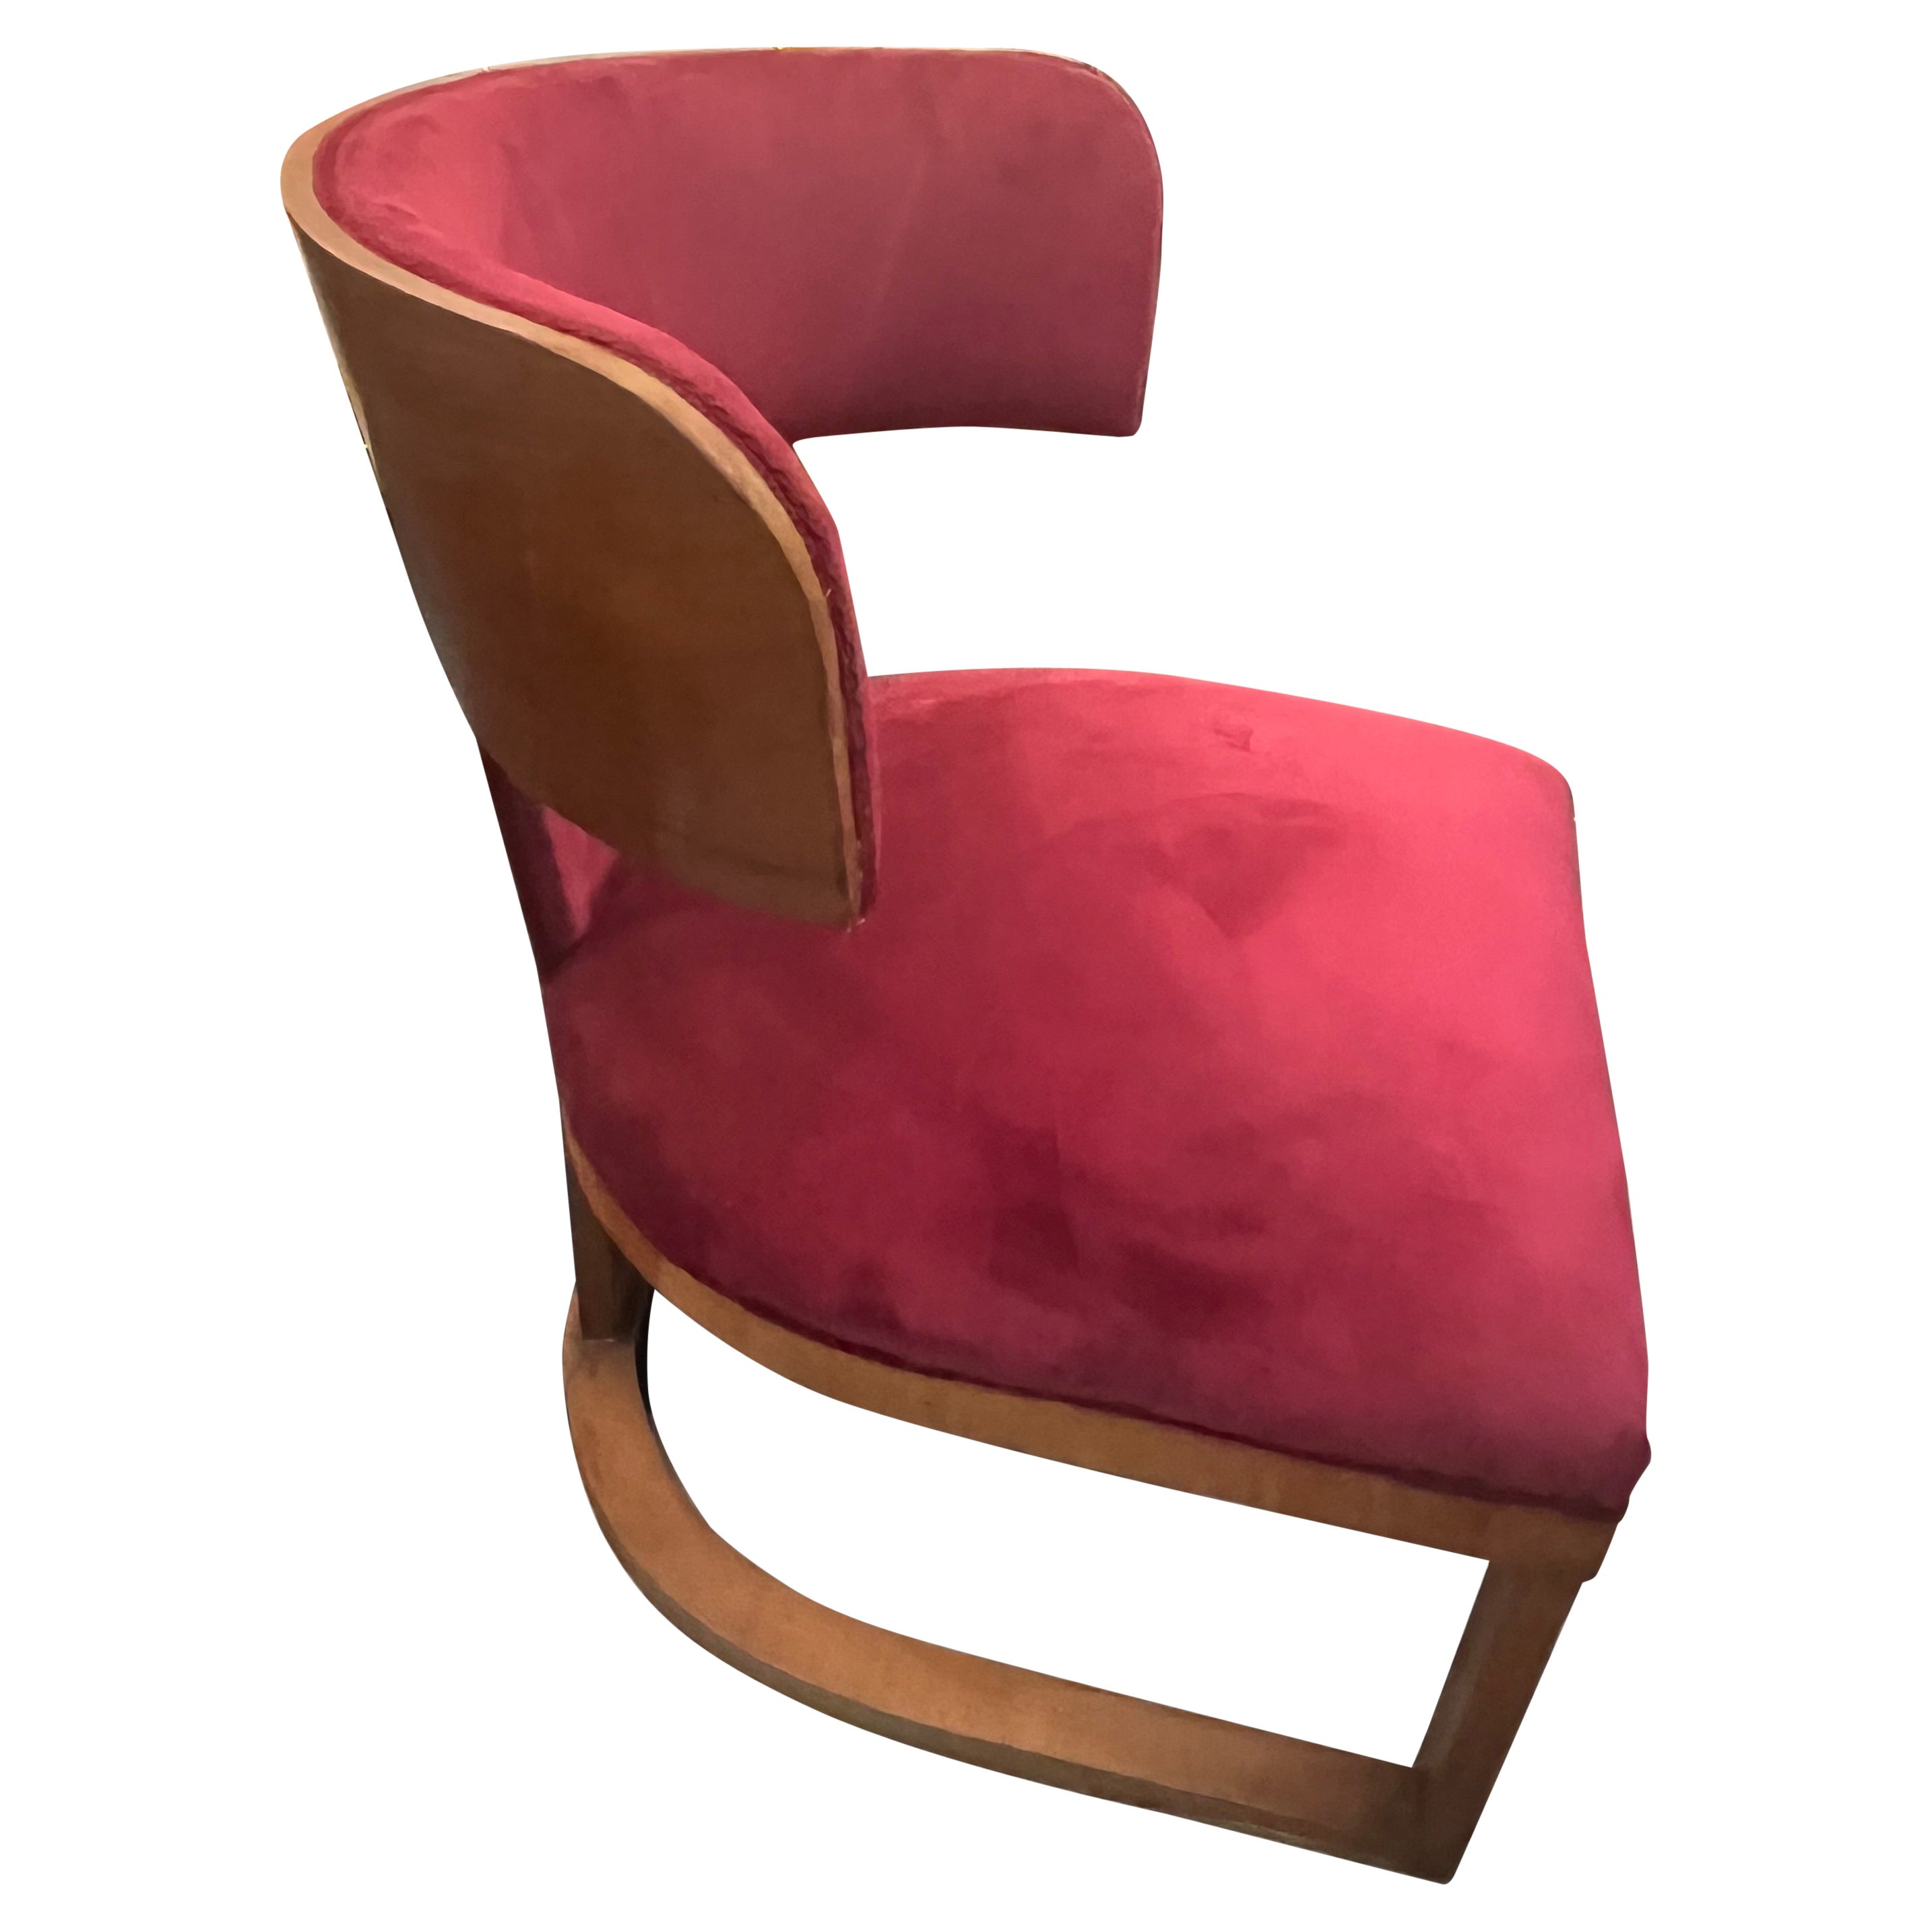 Art Deco armchair by Ernesto Lapadula 1930s made of Walnut wood and Fuchsia velvet